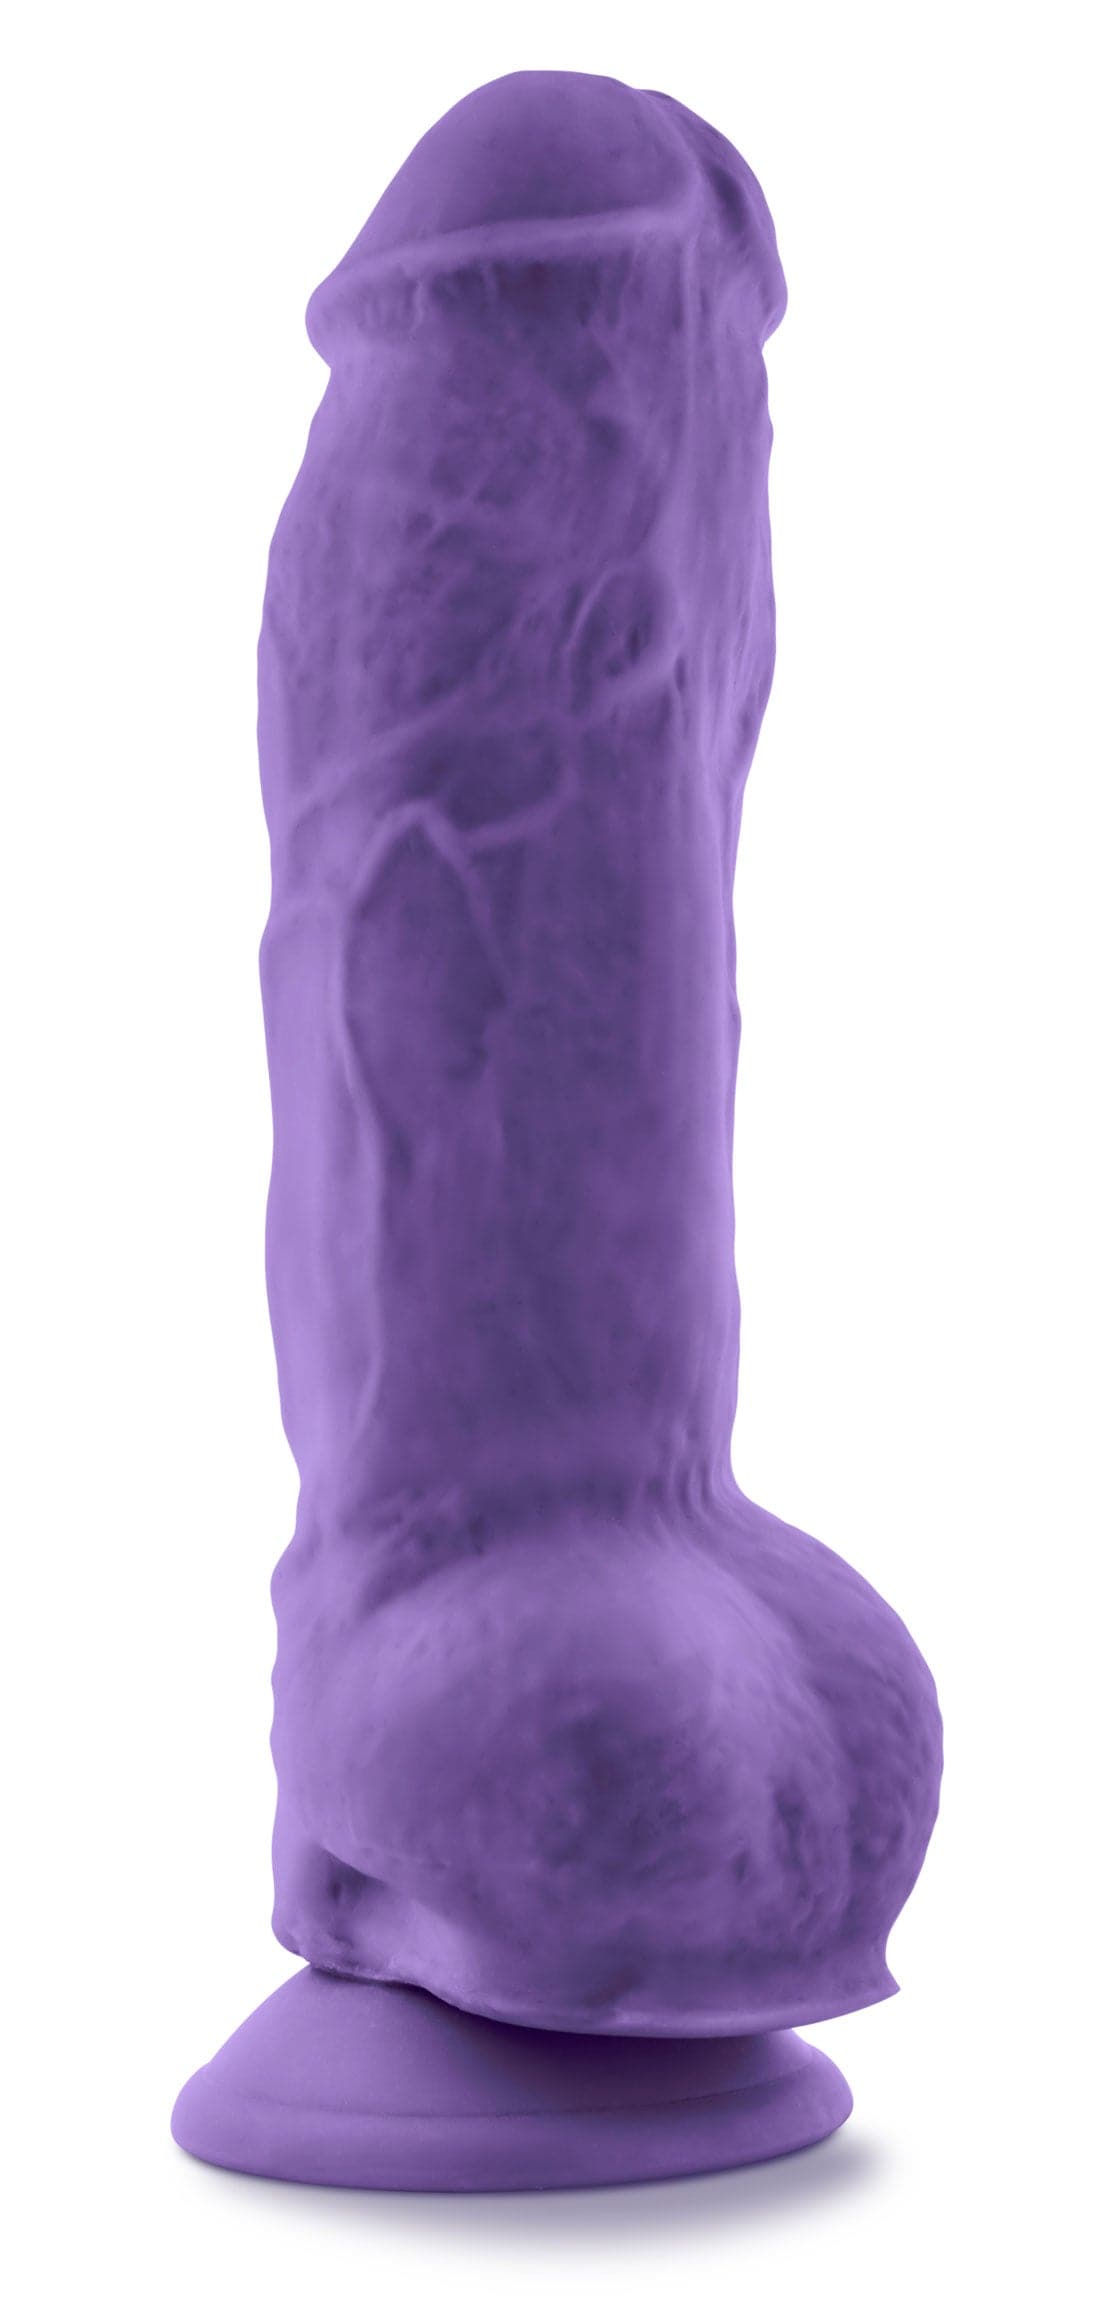 au naturel bold big boy 10 inch dildo purple